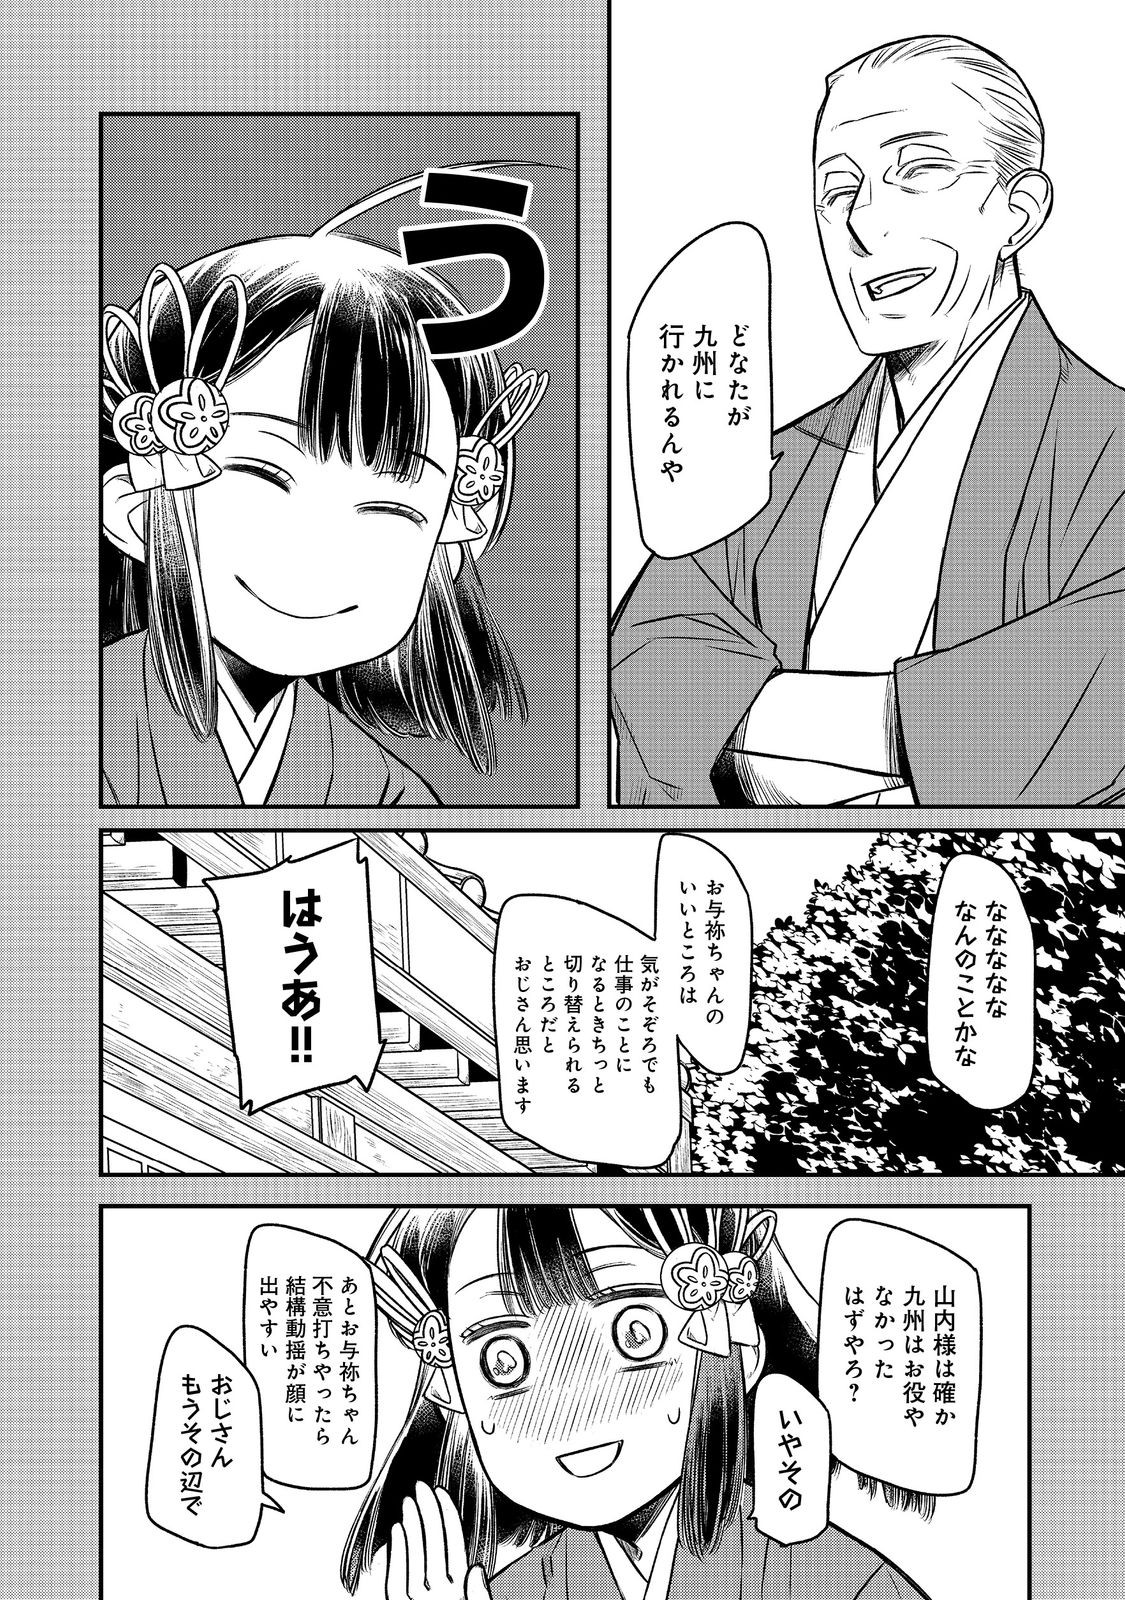 Kitanomandokoro-sama no Okeshougakari - Chapter 8.1 - Page 12